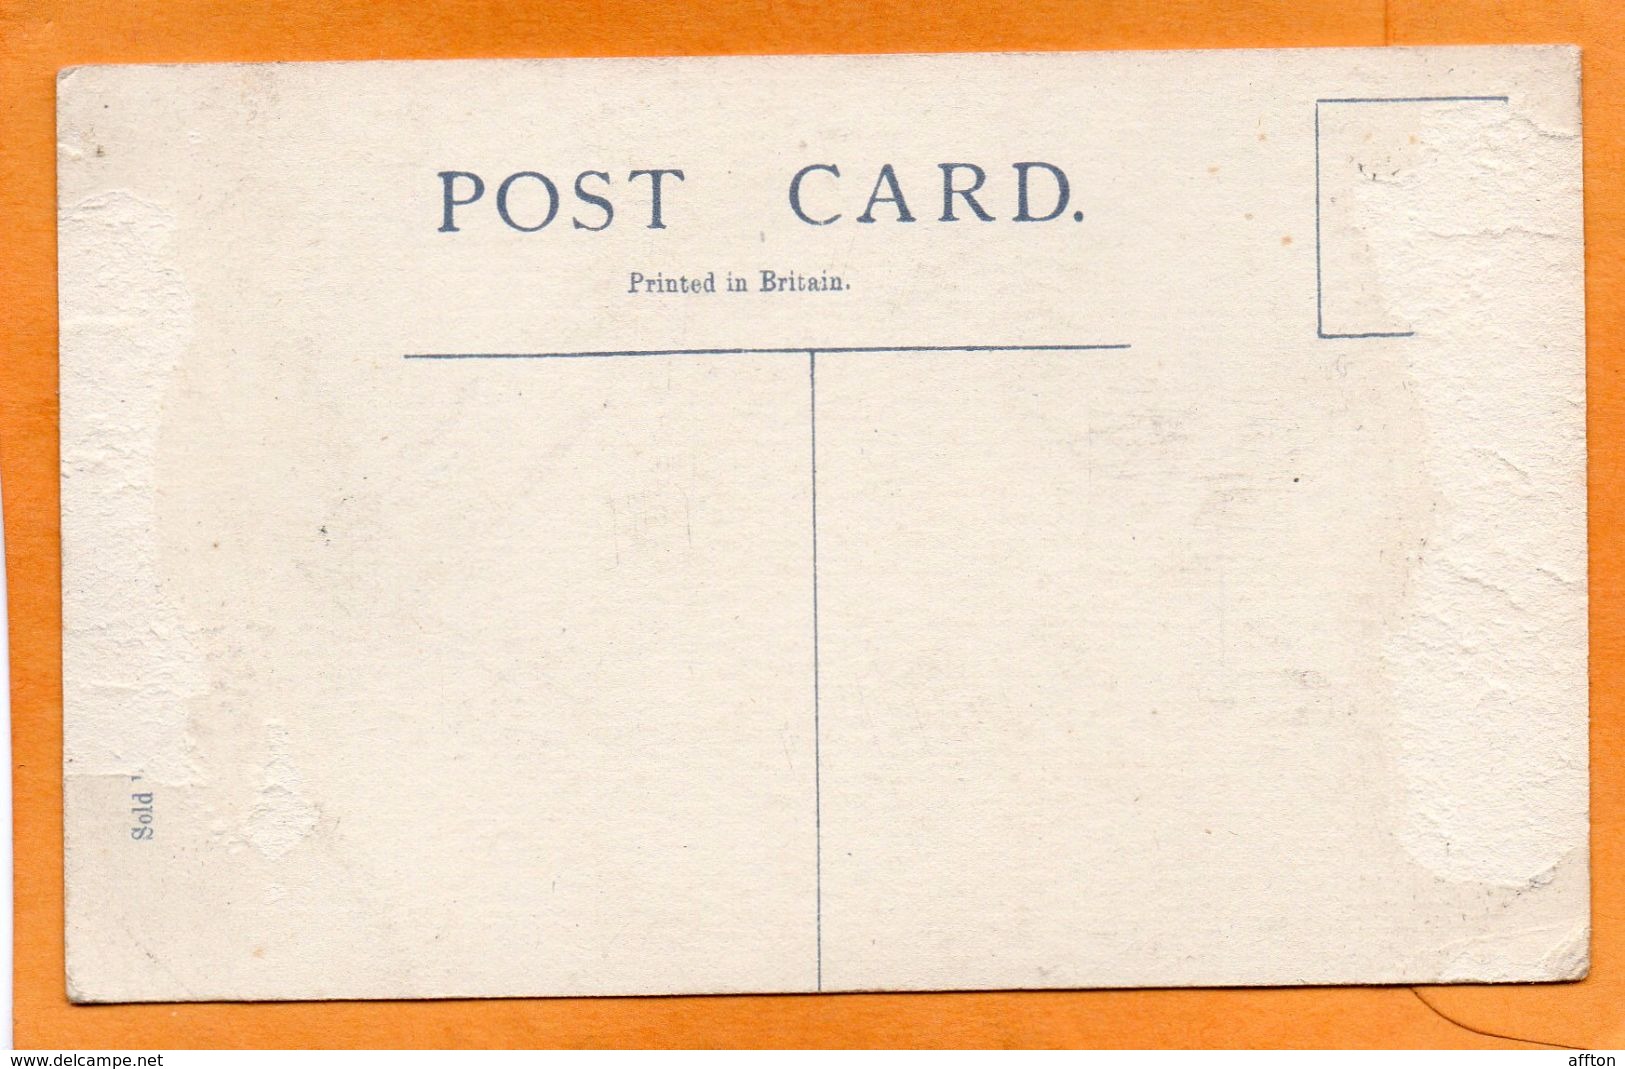 Saint Lucia BWI 1910 Postcard - Sainte-Lucie